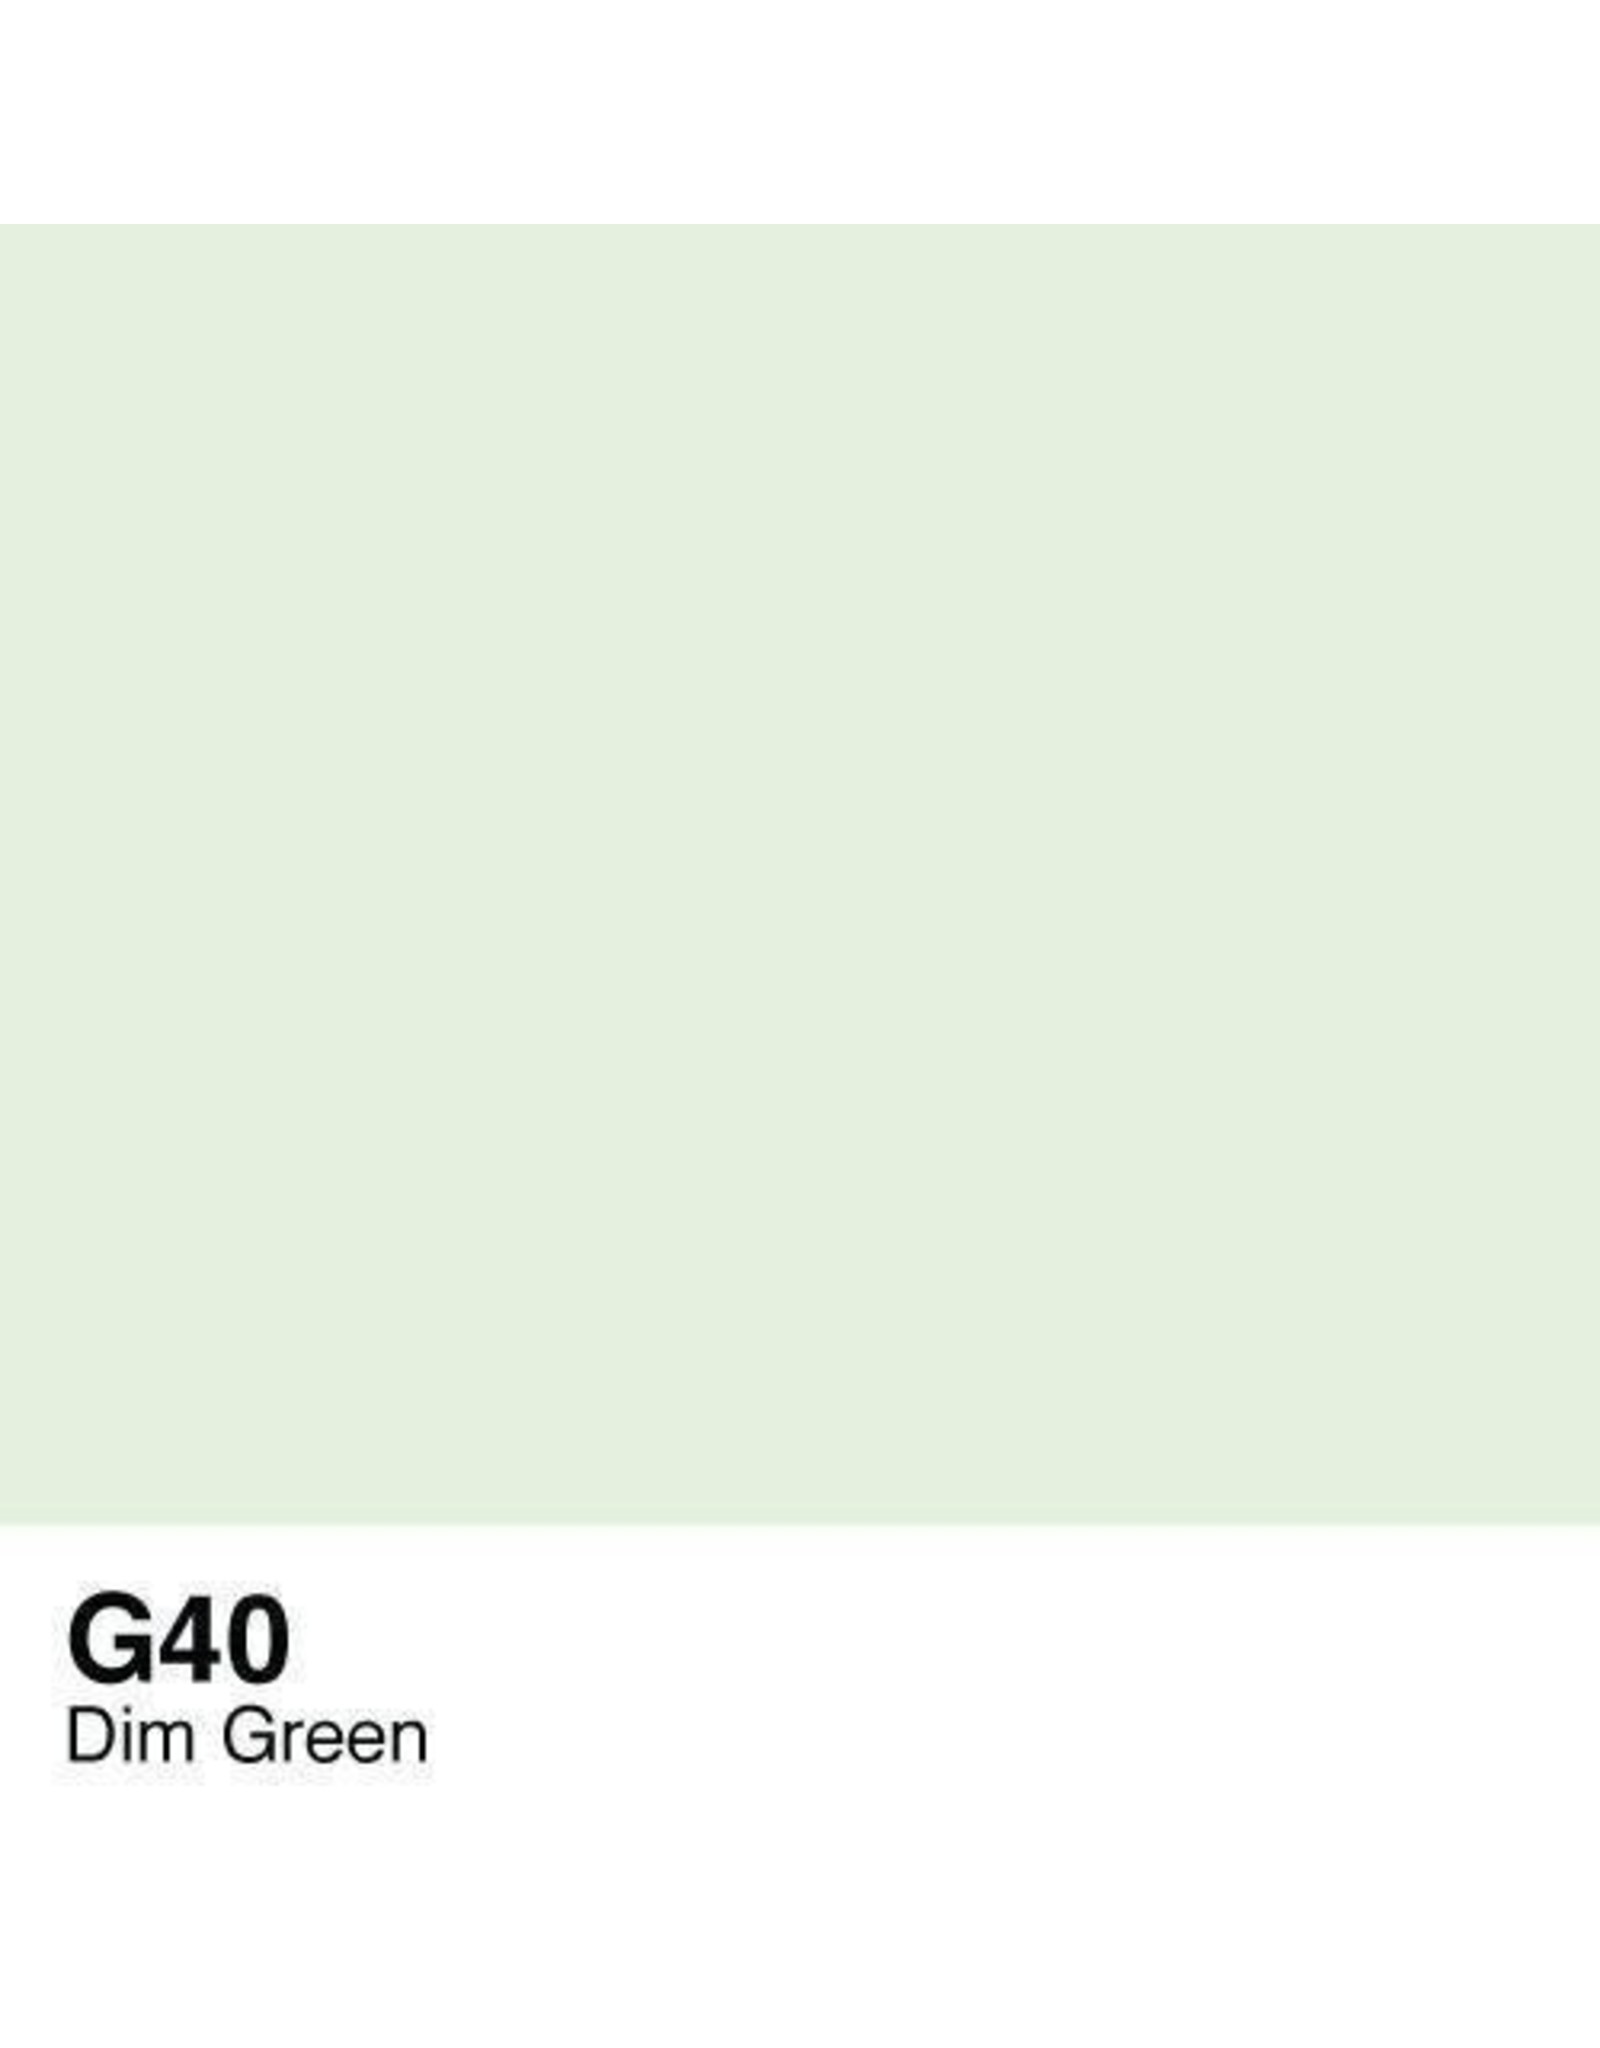 COPIC COPIC G40 DIM GREEN SKETCH MARKER